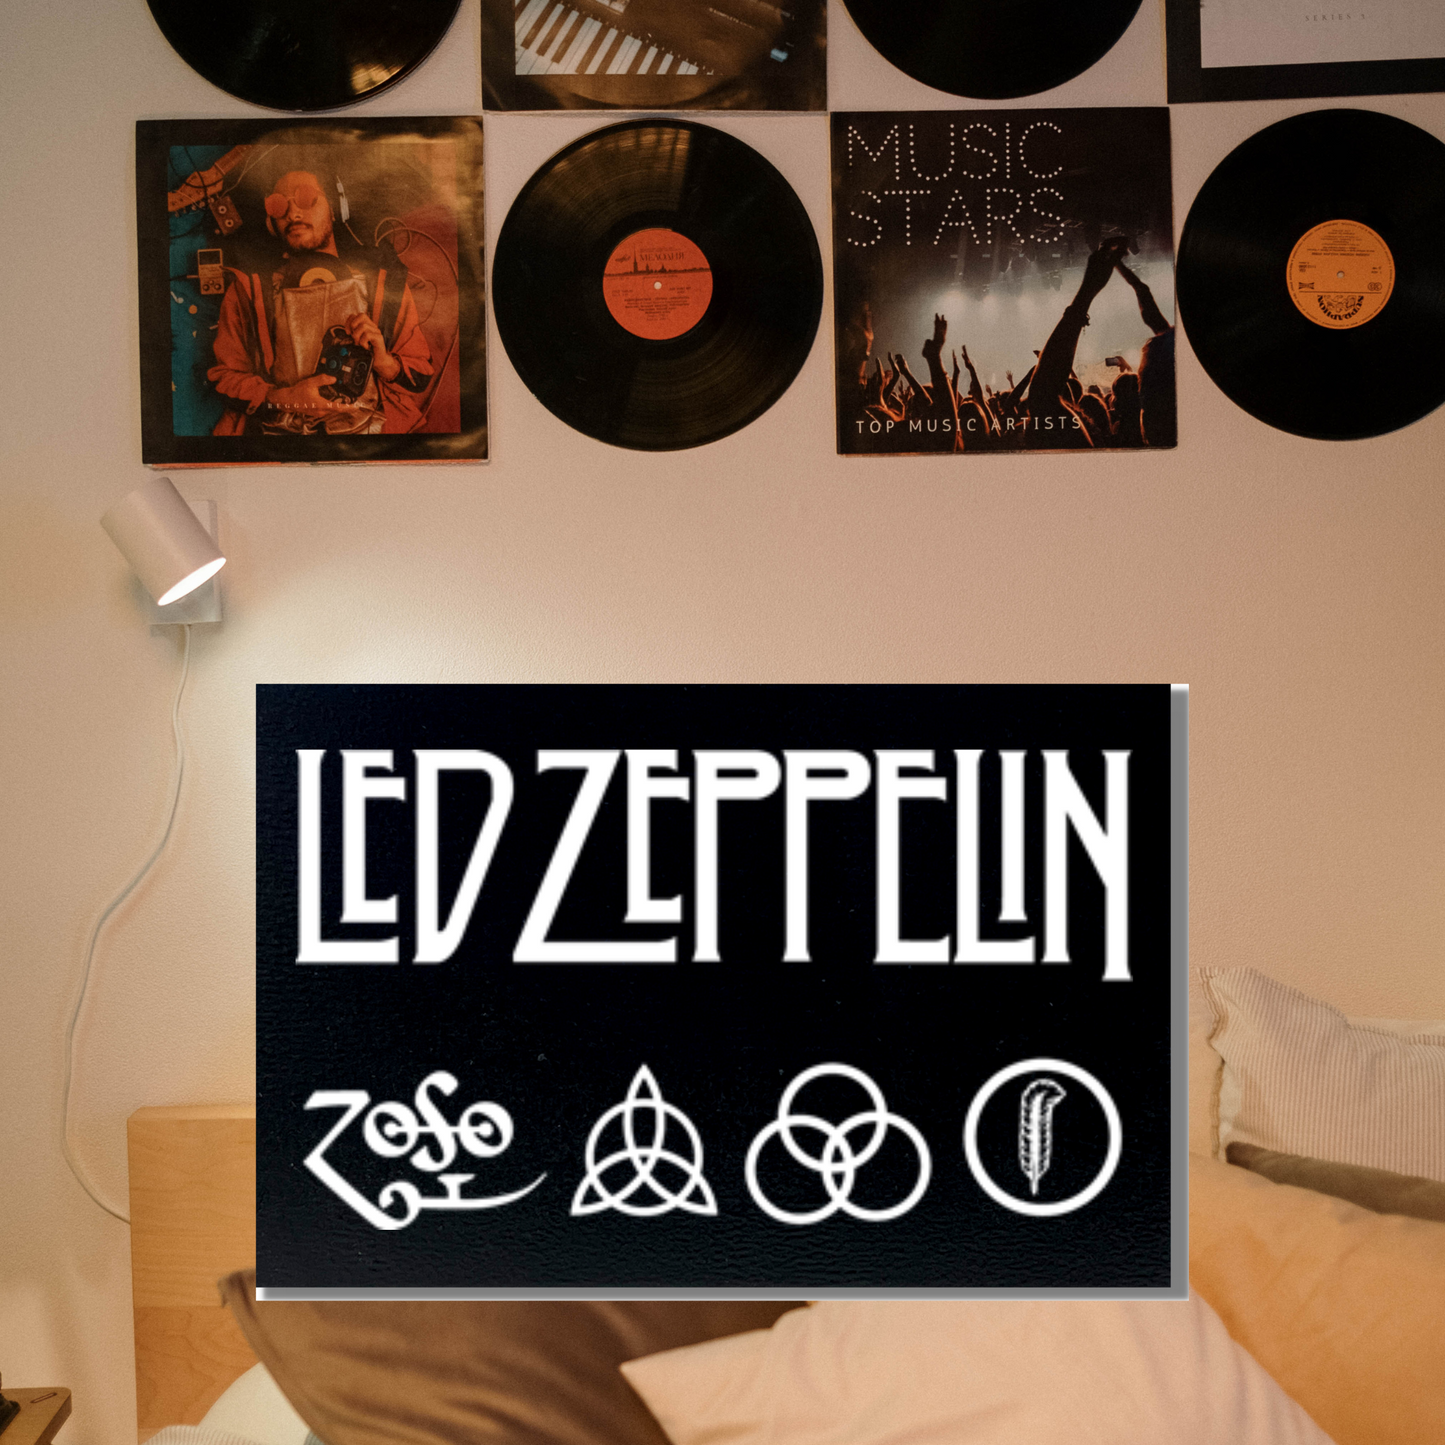 Led Zeppelin Wood Wall Art Sign